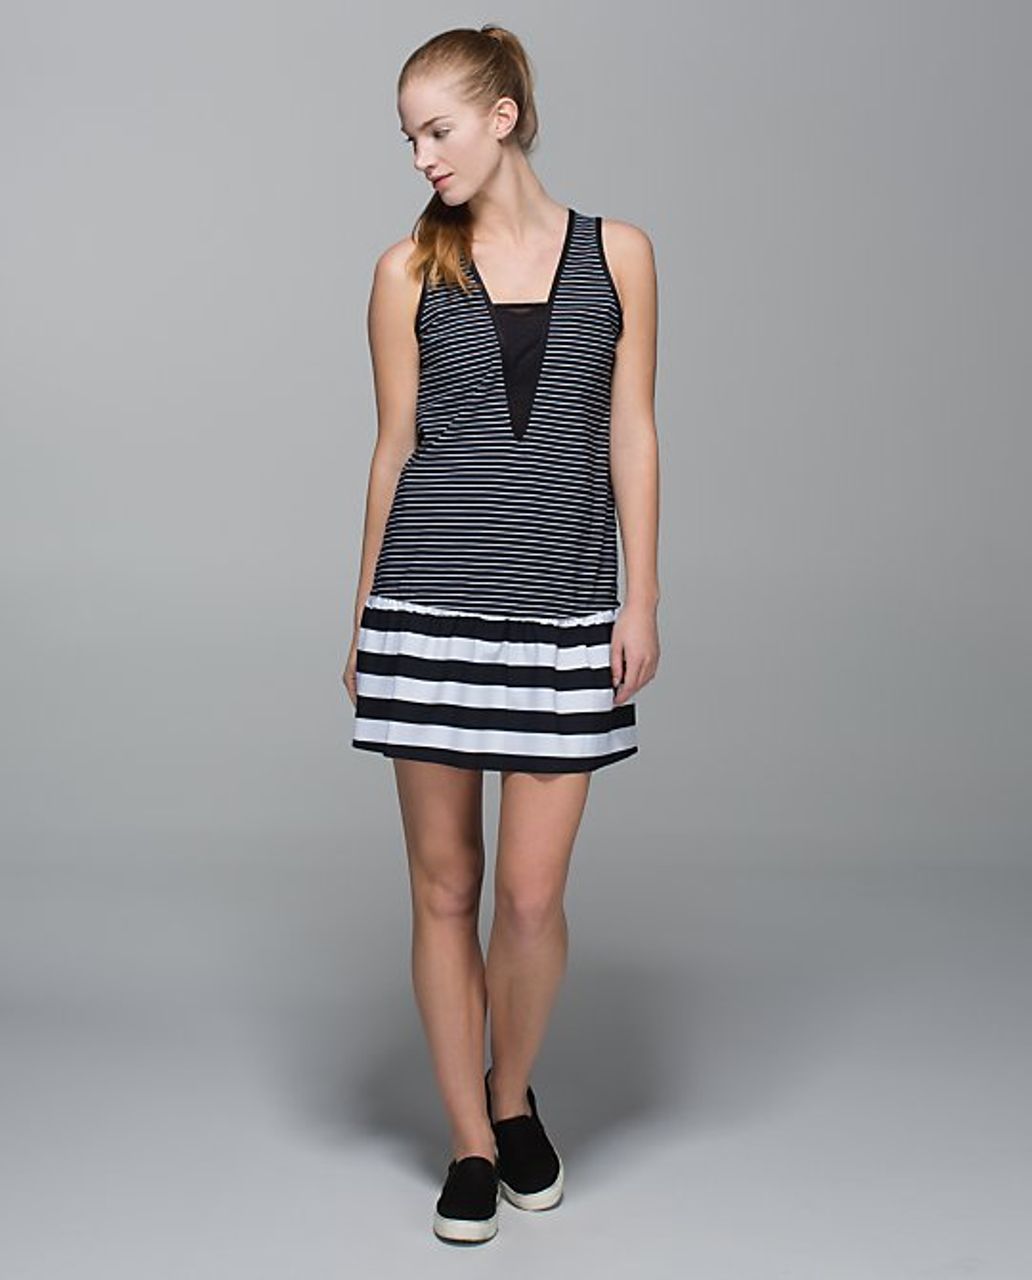 Lululemon Both Ways Dress - Parallel Stripe / Black